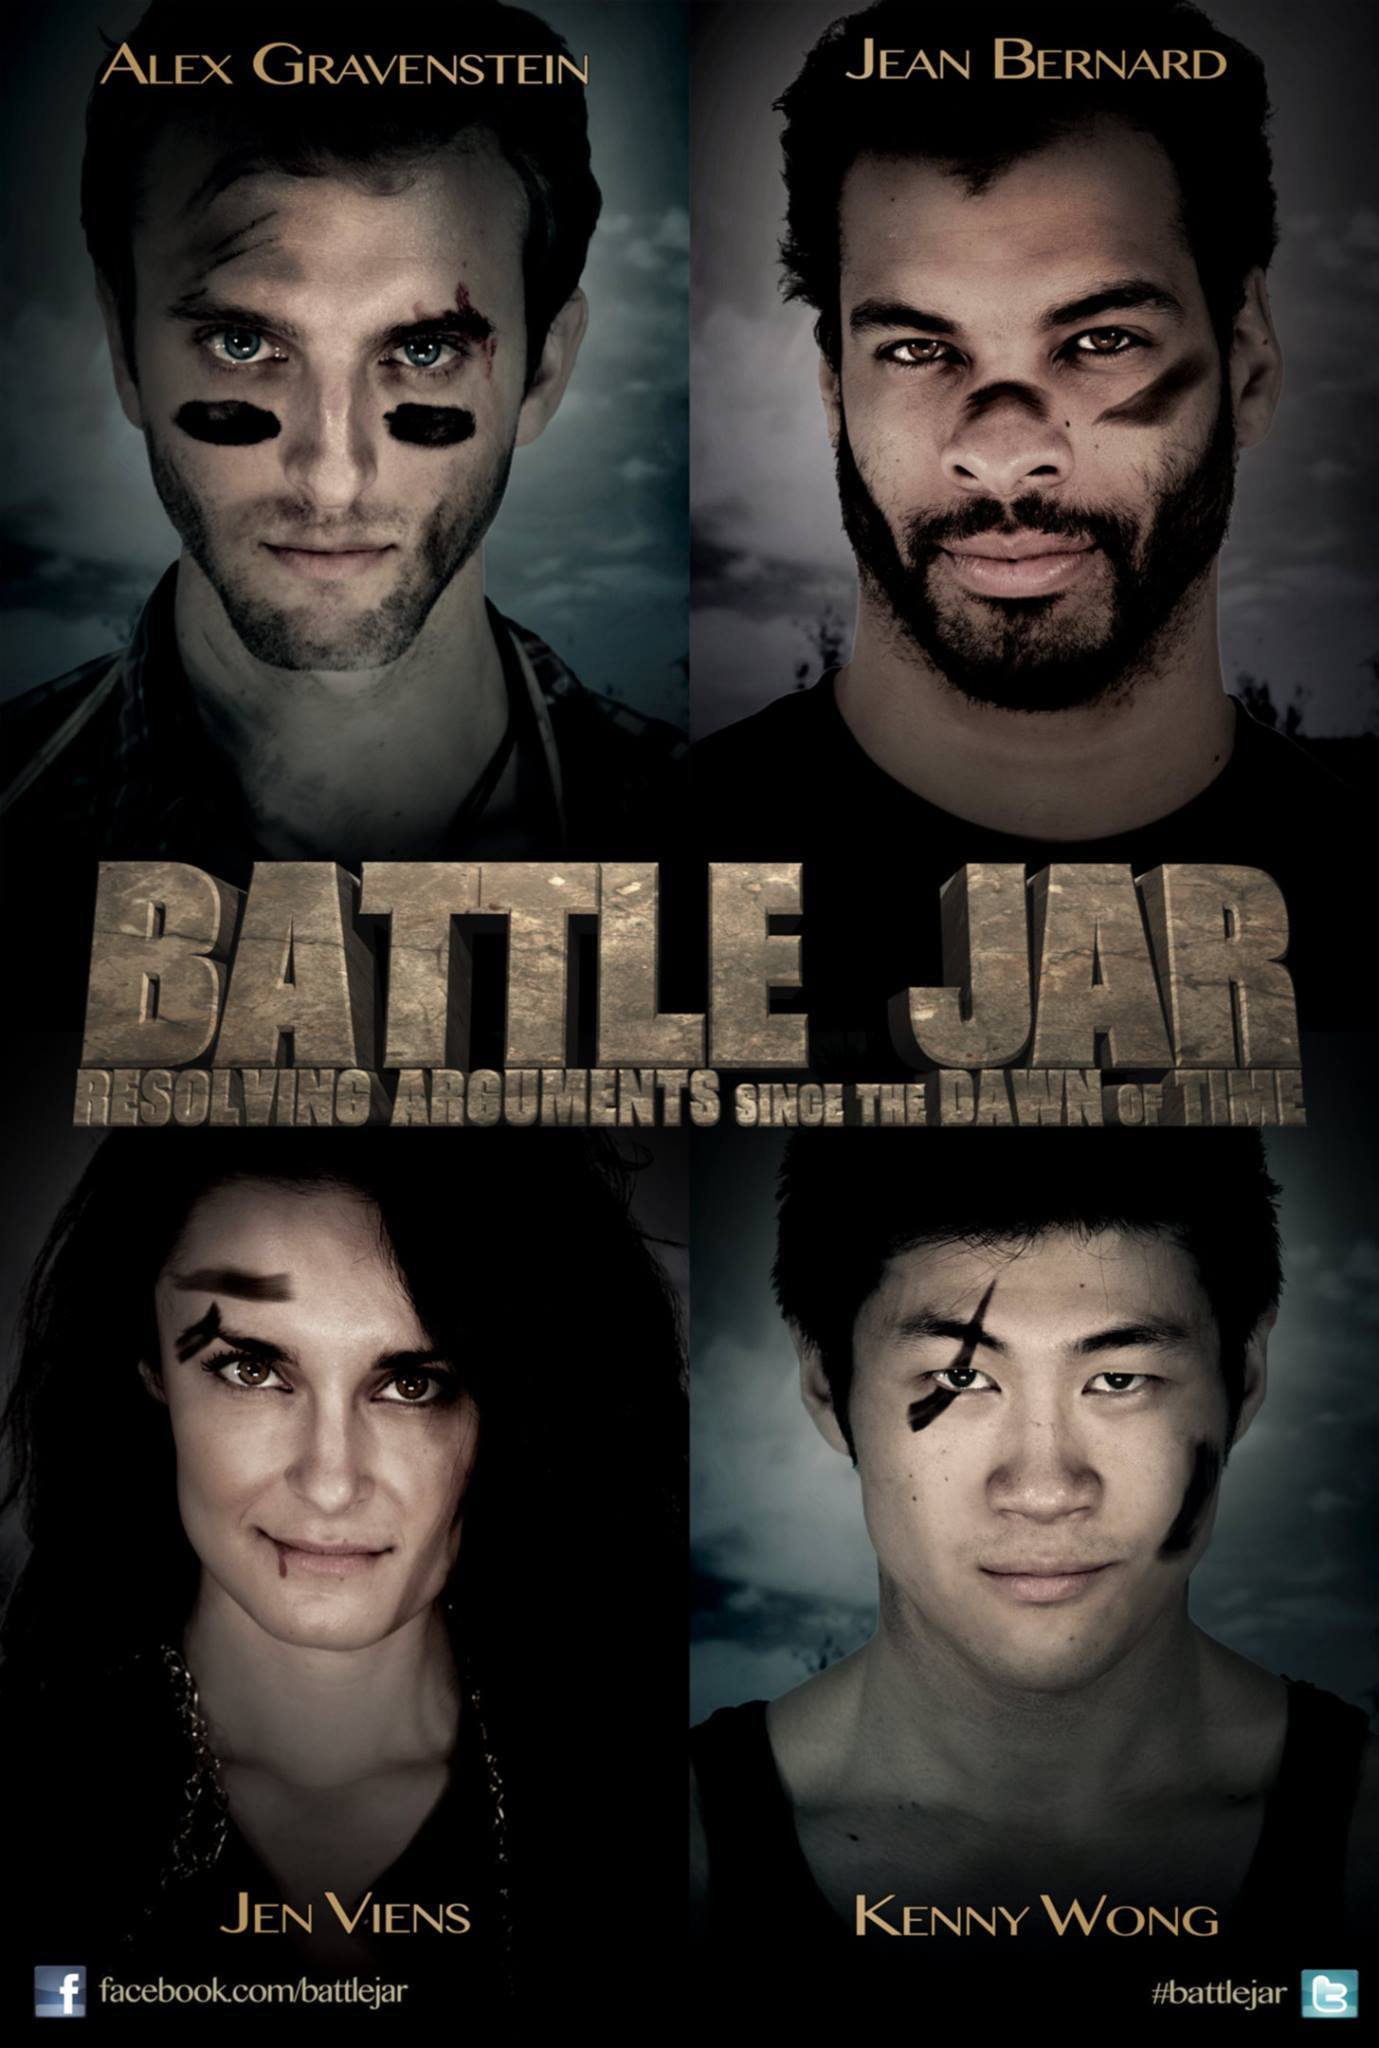 Jen Viens, Alex Gravenstein, Kenny Wong and Jean Bernard in Battle Jar: Resolving Arguments Since the Dawn of Time (2015)